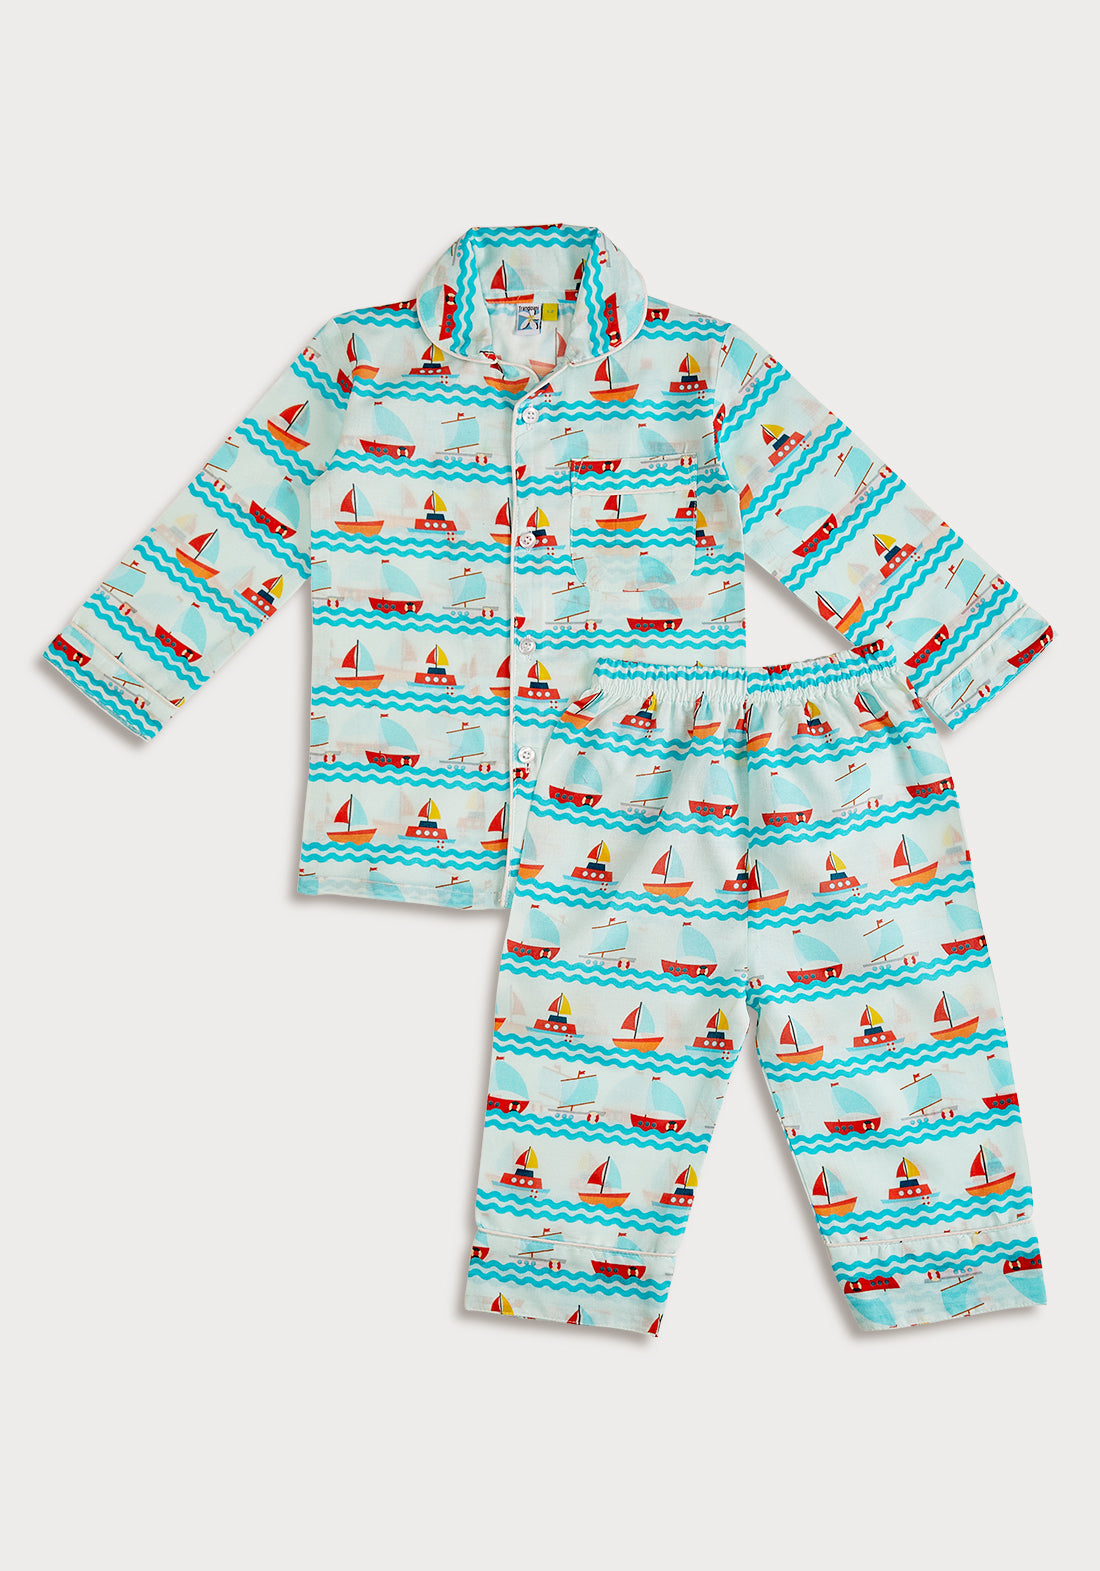 1 year old boy clothes set| Alibaba.com